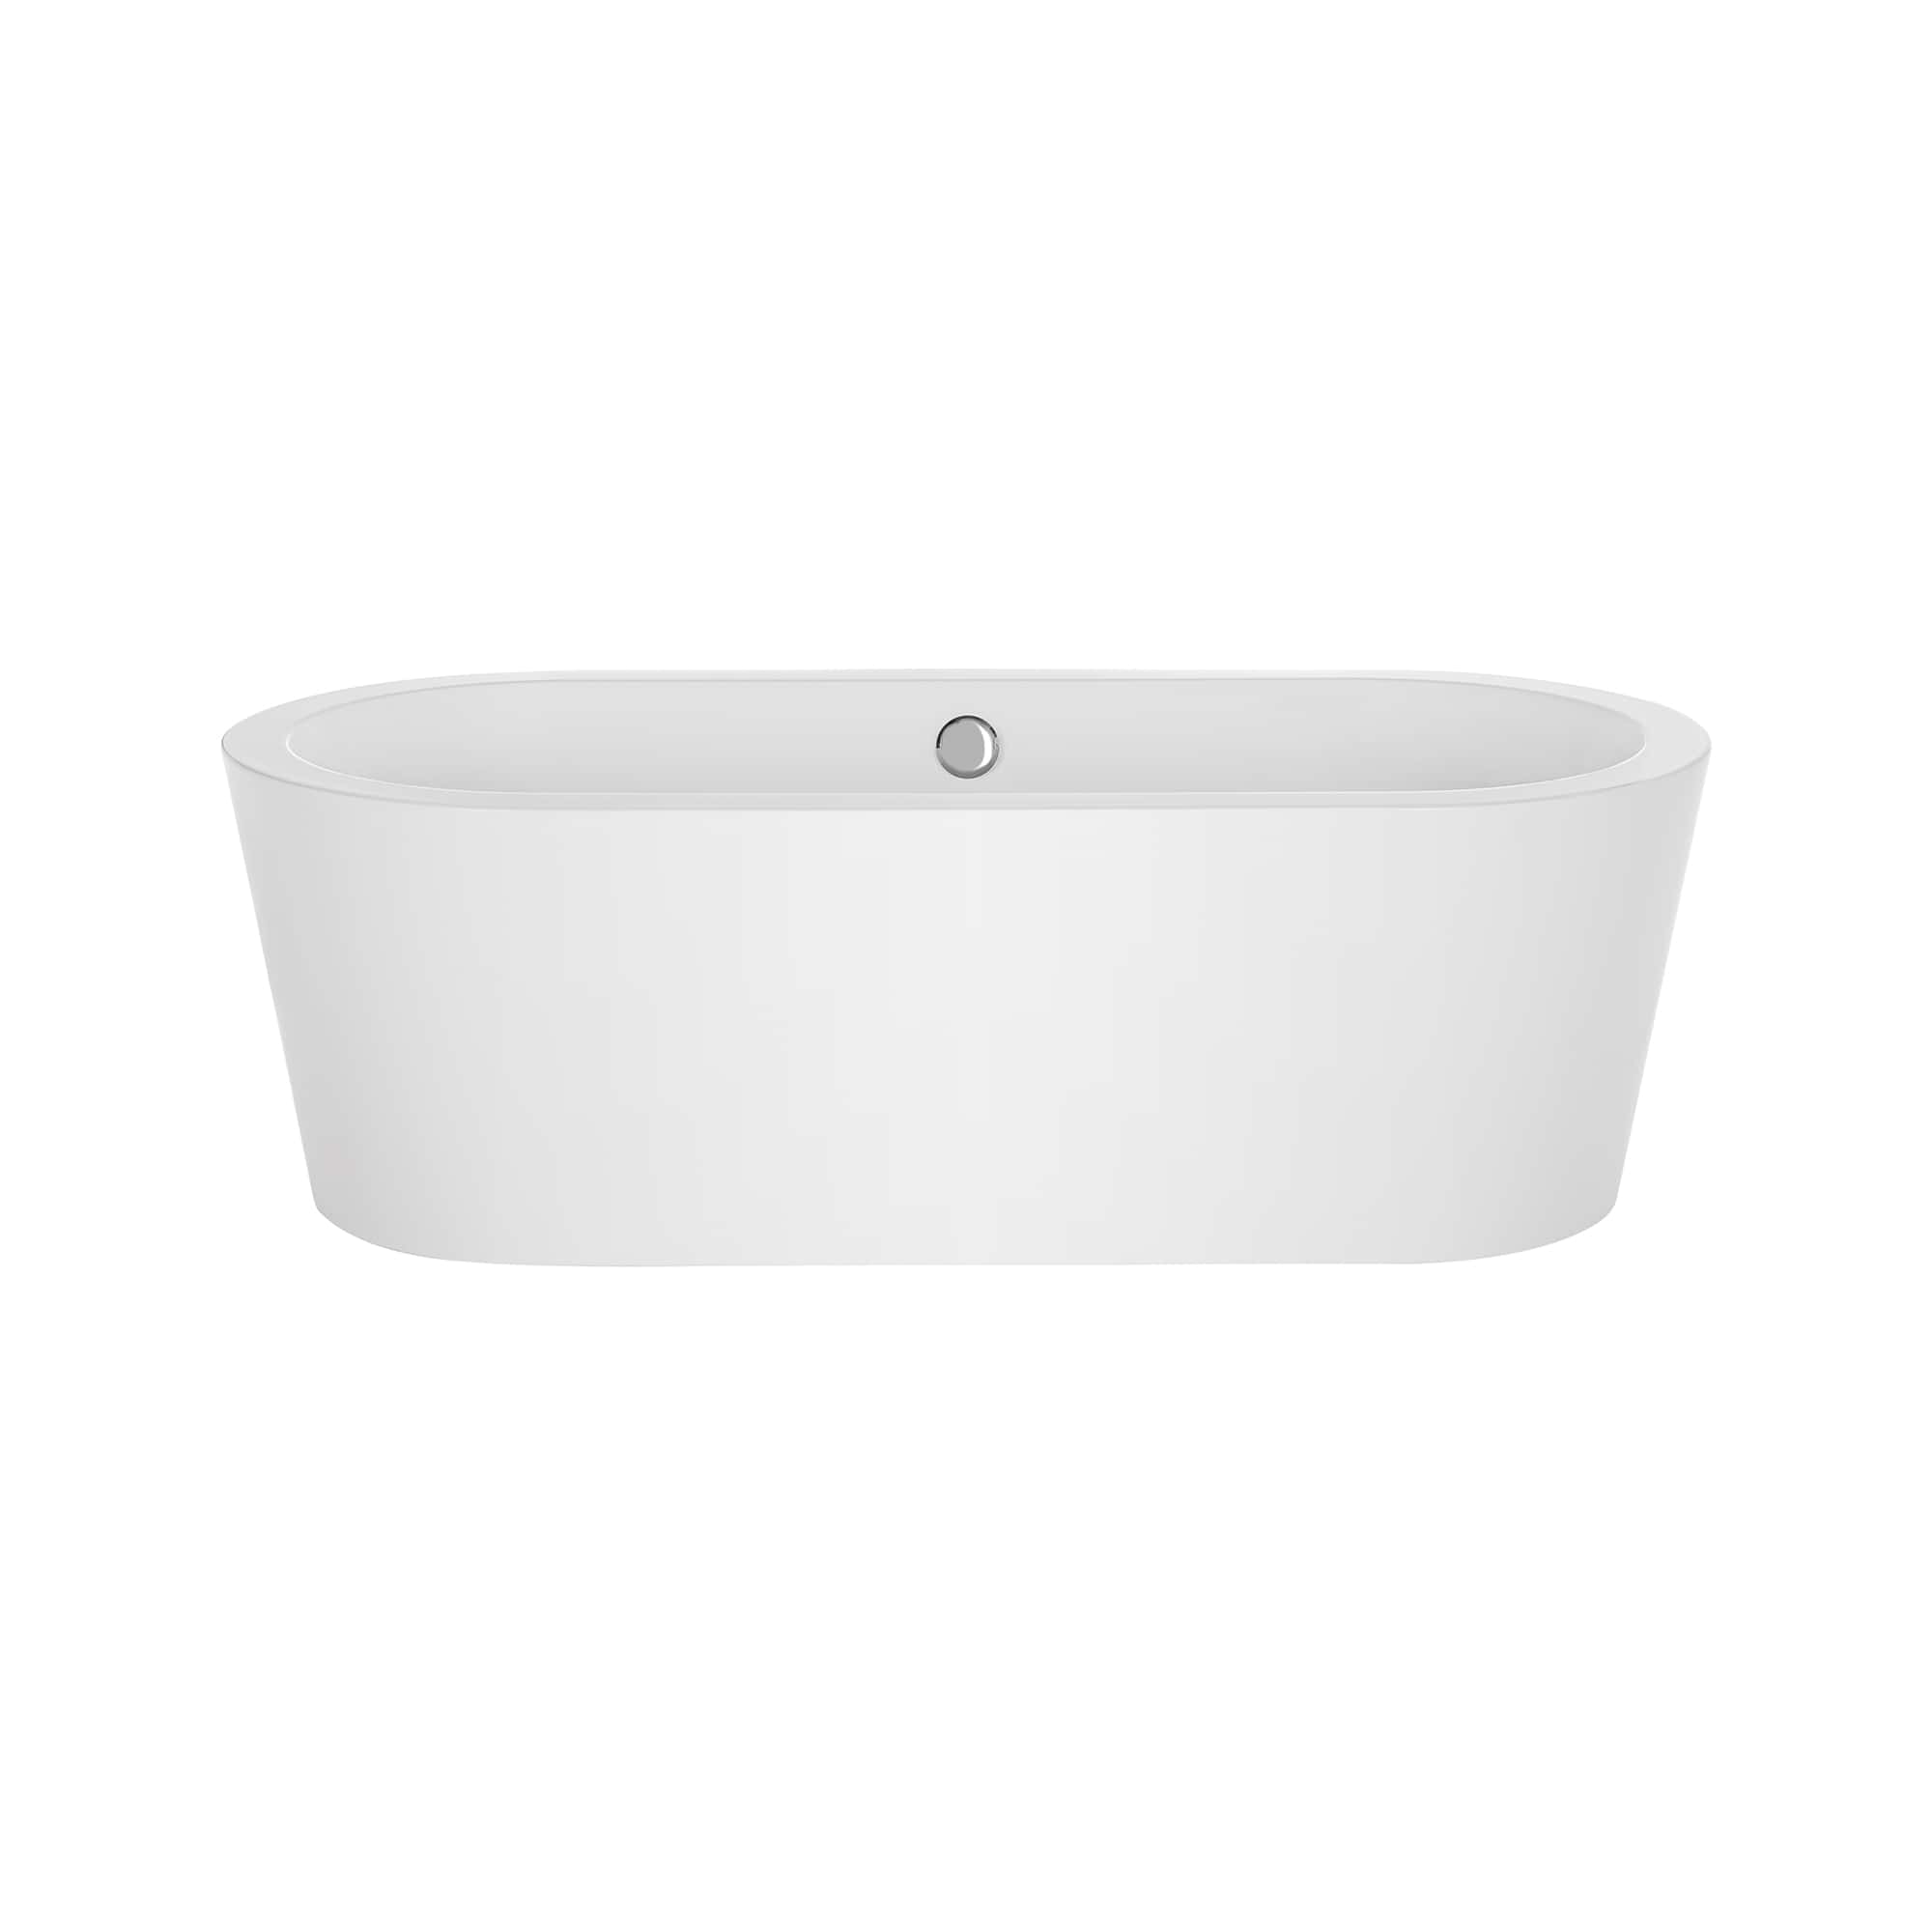 Empava-59FT1505 luxury freestanding acrylic soaking oval modern white SPA bathtub front view